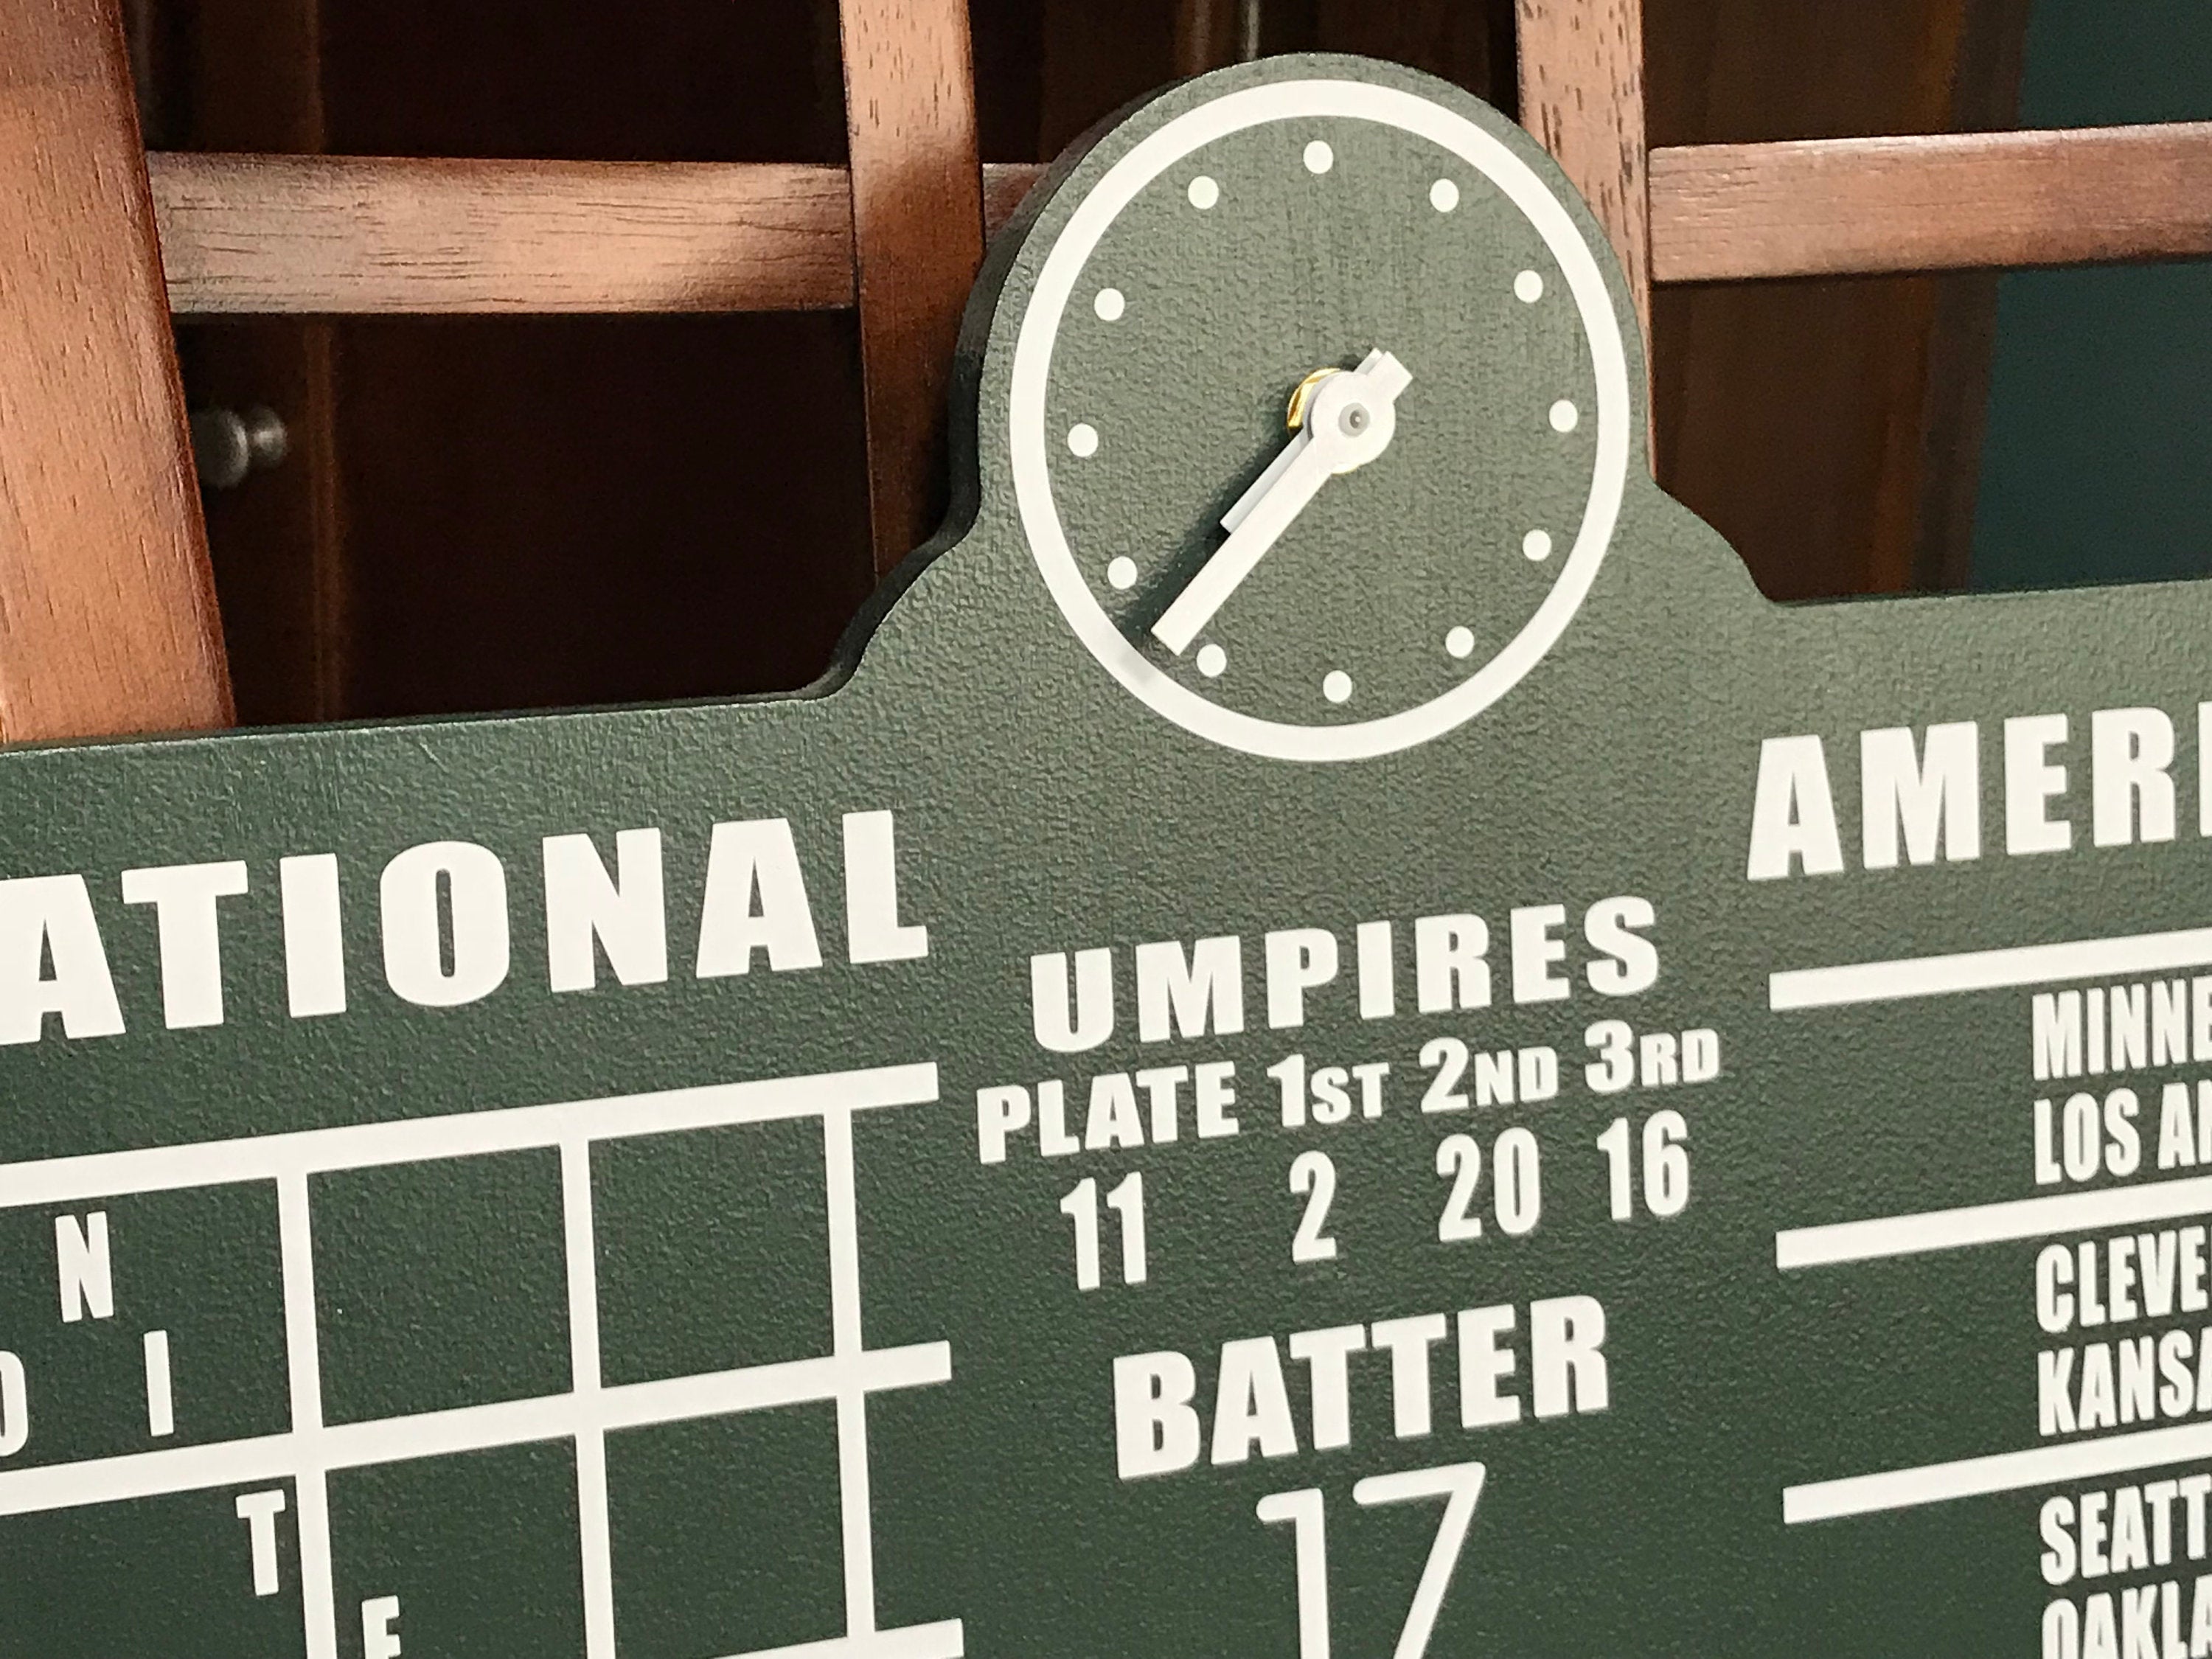 Chicago Cubs Wrigley Field Scoreboard Collectible Small Sign Memorabilia 24" Wide